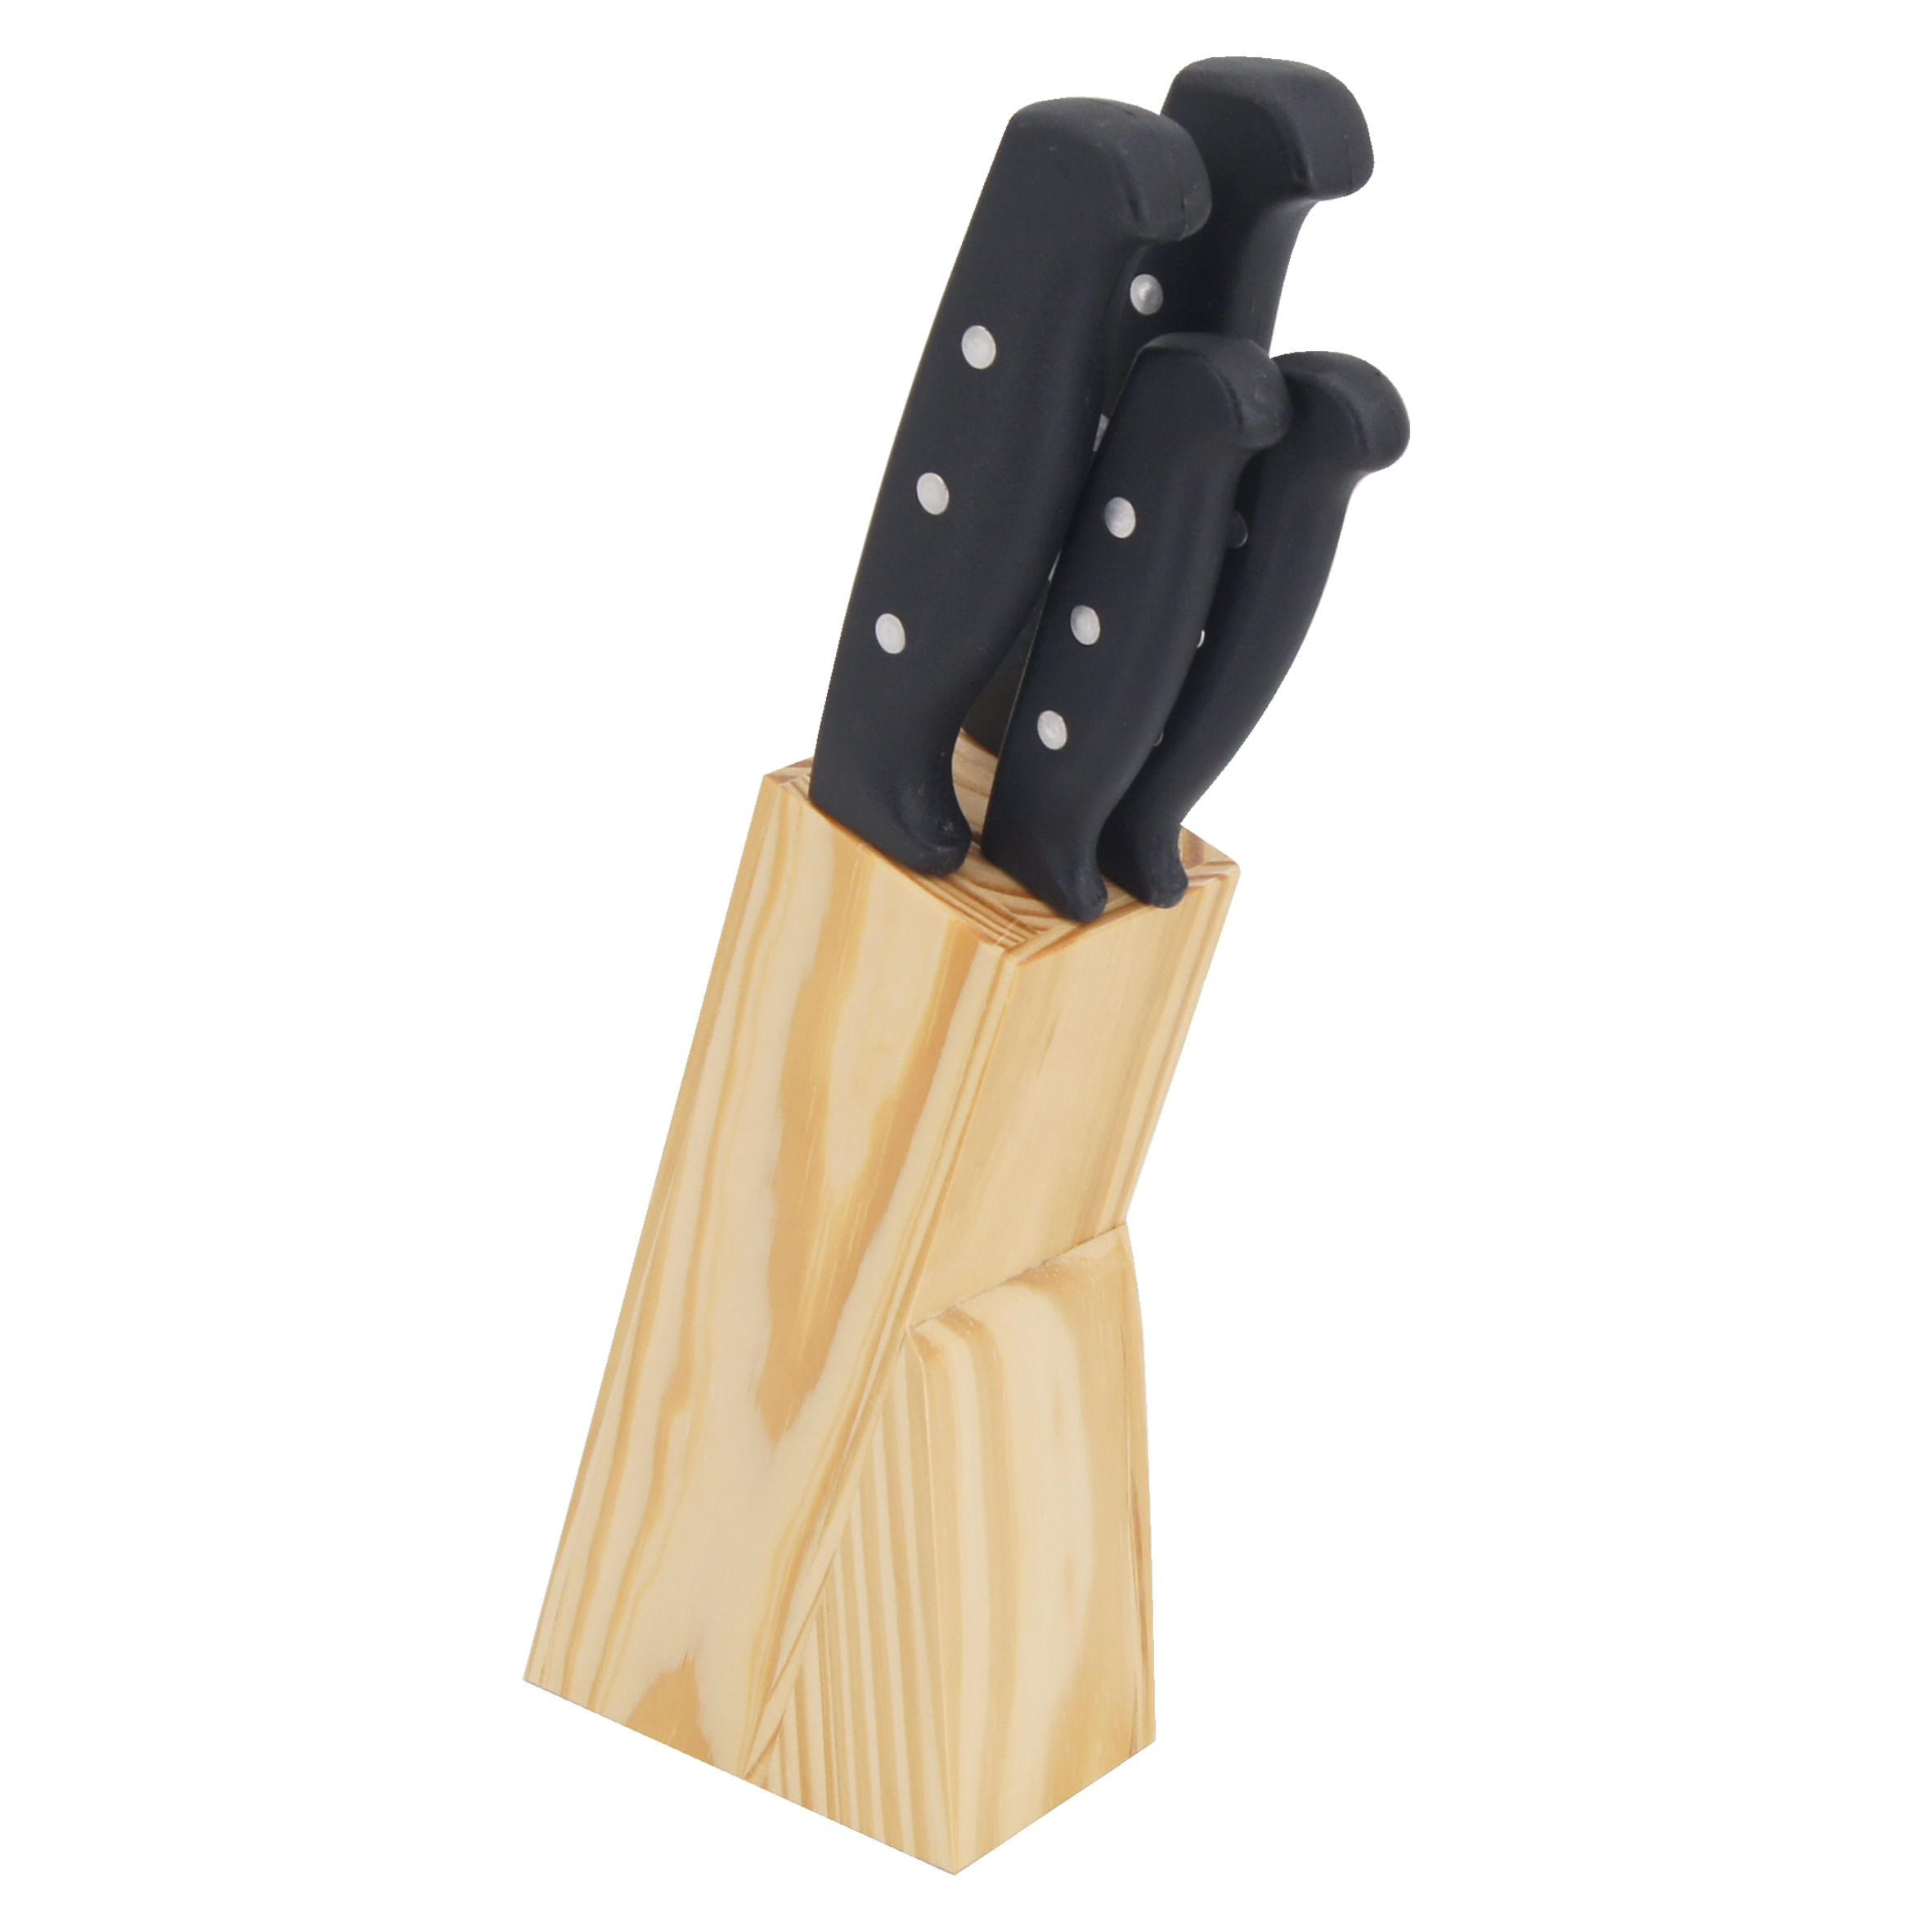  Joseph Joseph 10527 Elevate Knives Carousel Juego de cuchillos  con soporte de almacenamiento giratorio, 6 piezas, negro (actualizado) :  Hogar y Cocina